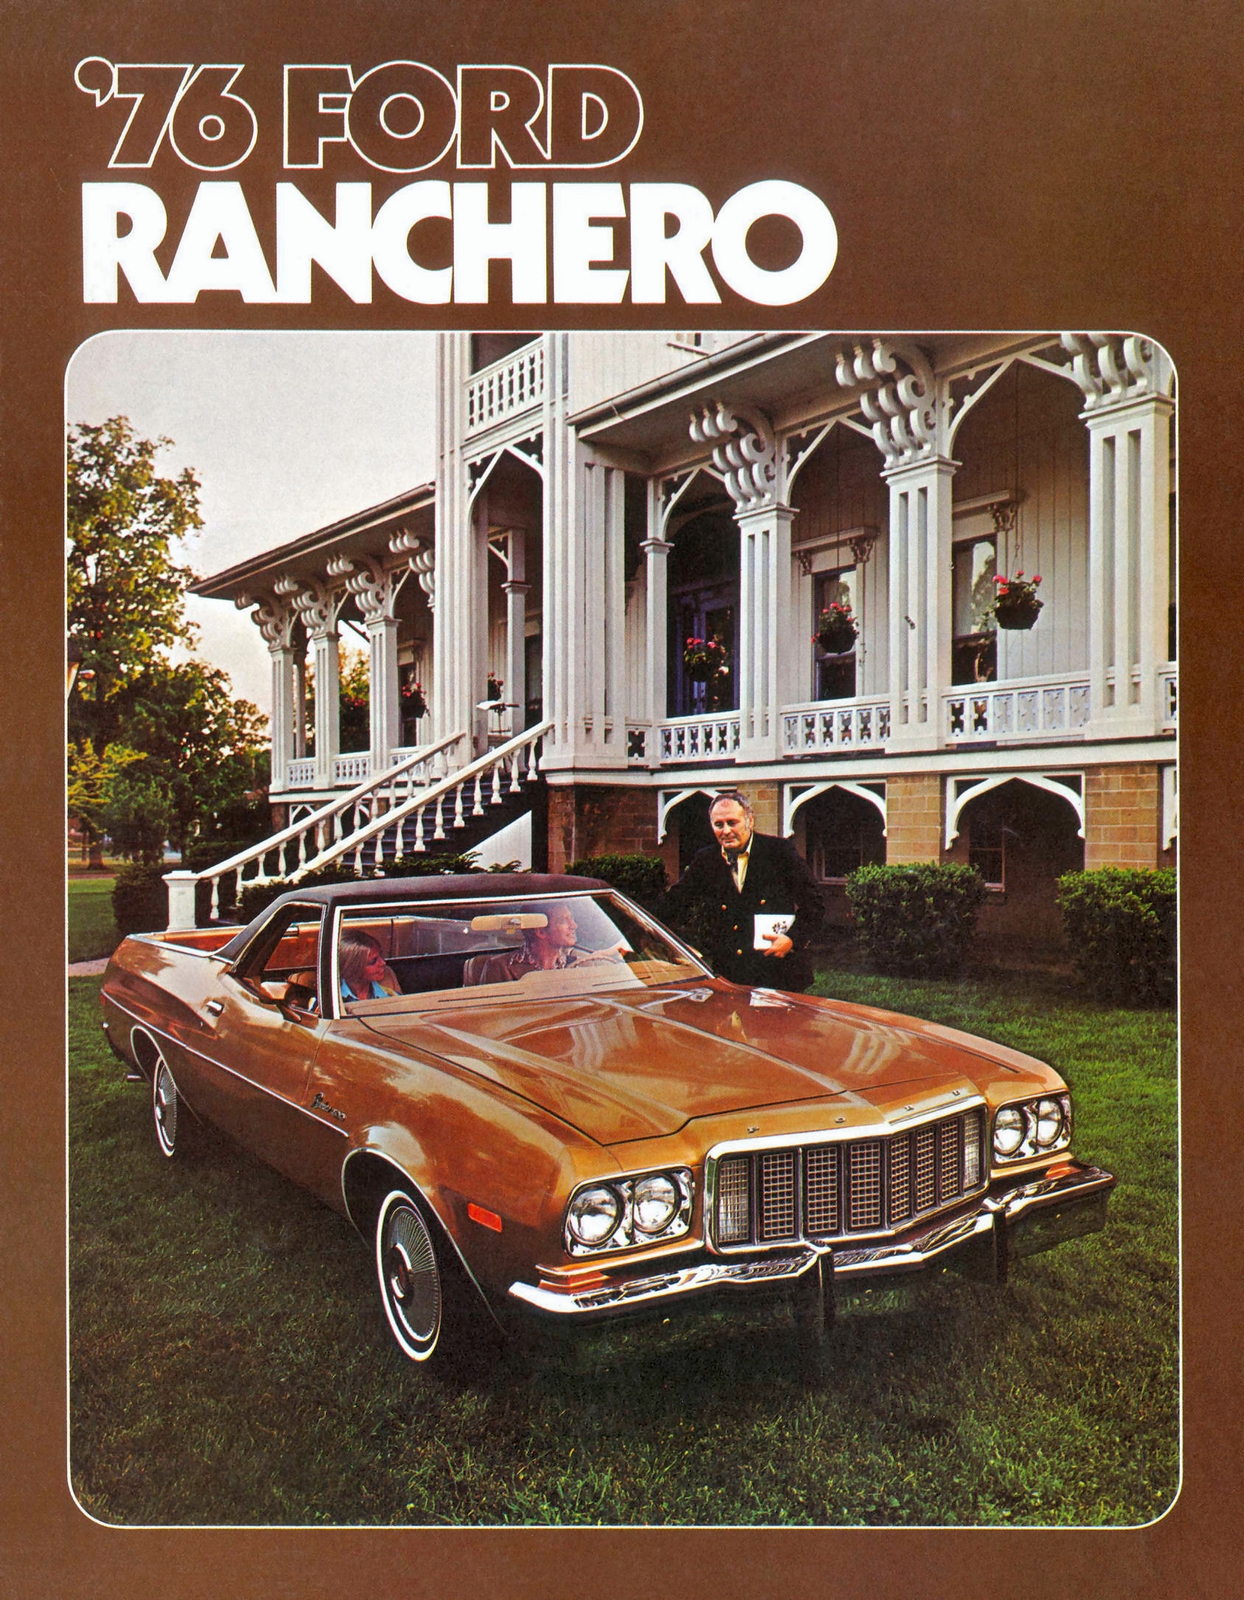 n_1976 Ford Ranchero-01.jpg